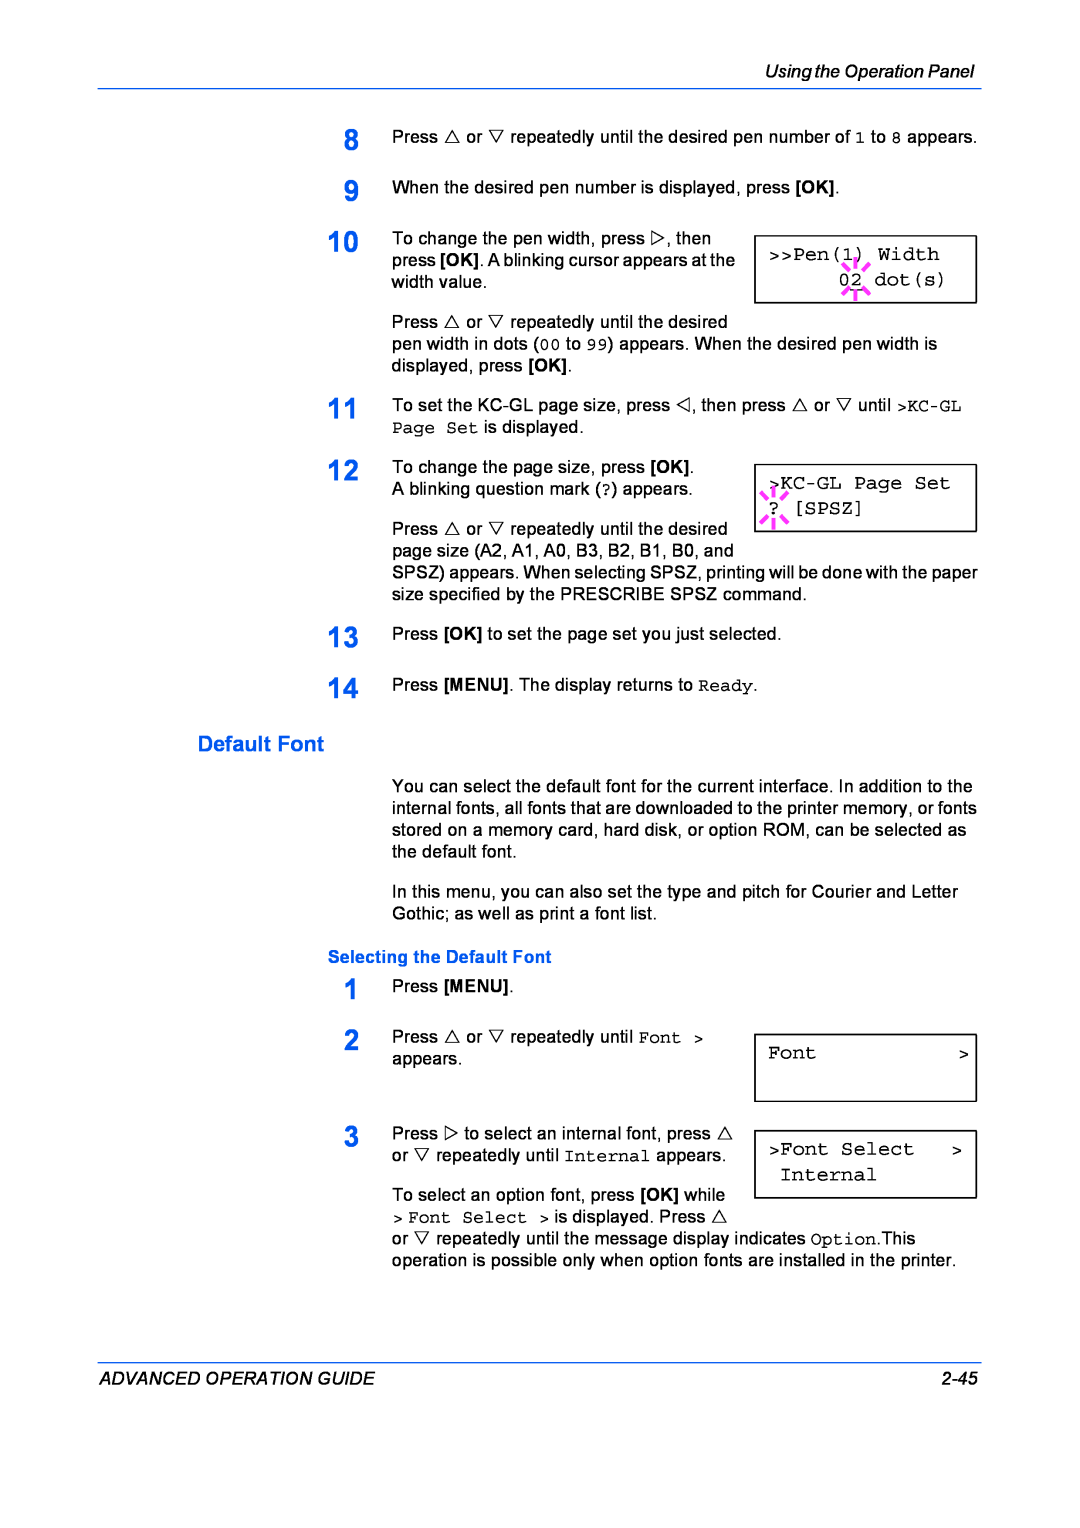 Kyocera 9530DN manual Width, dots, KC-GL Page Set, ? Spsz, Font Select, Internal, Selecting the Default Font 